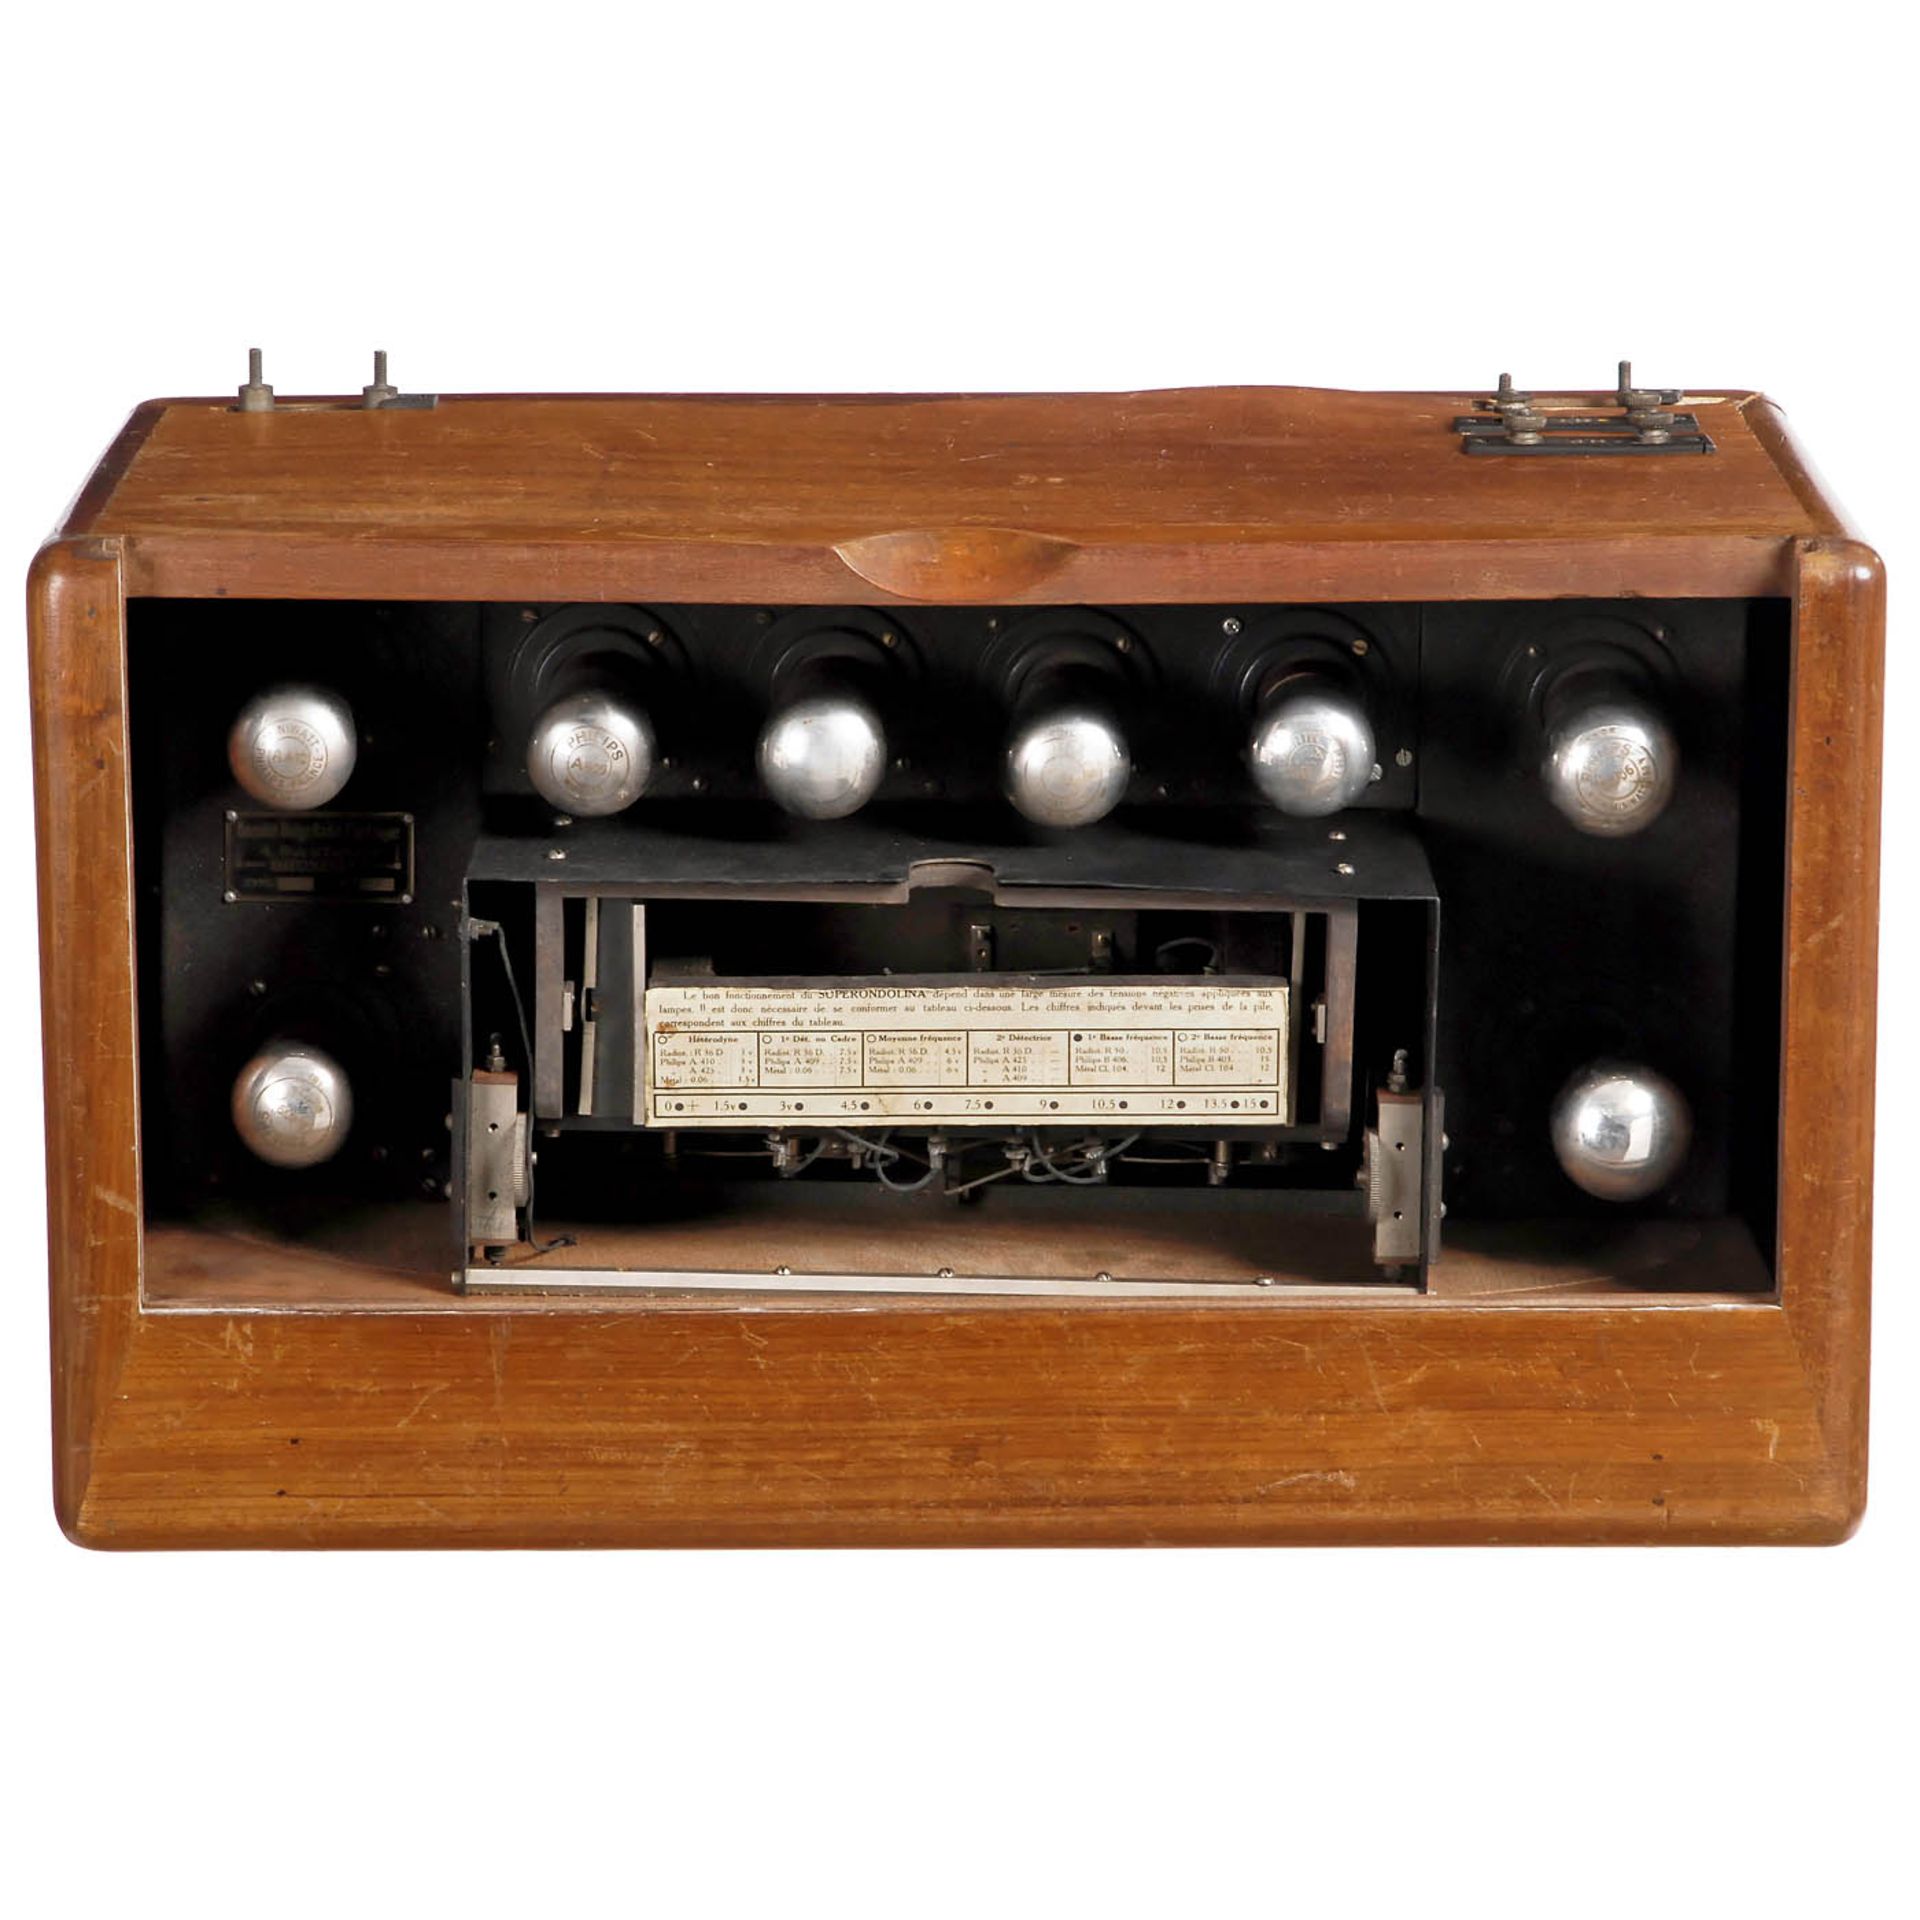 Radio SBR Super Ondolina 85, c. 1927 - Image 2 of 2